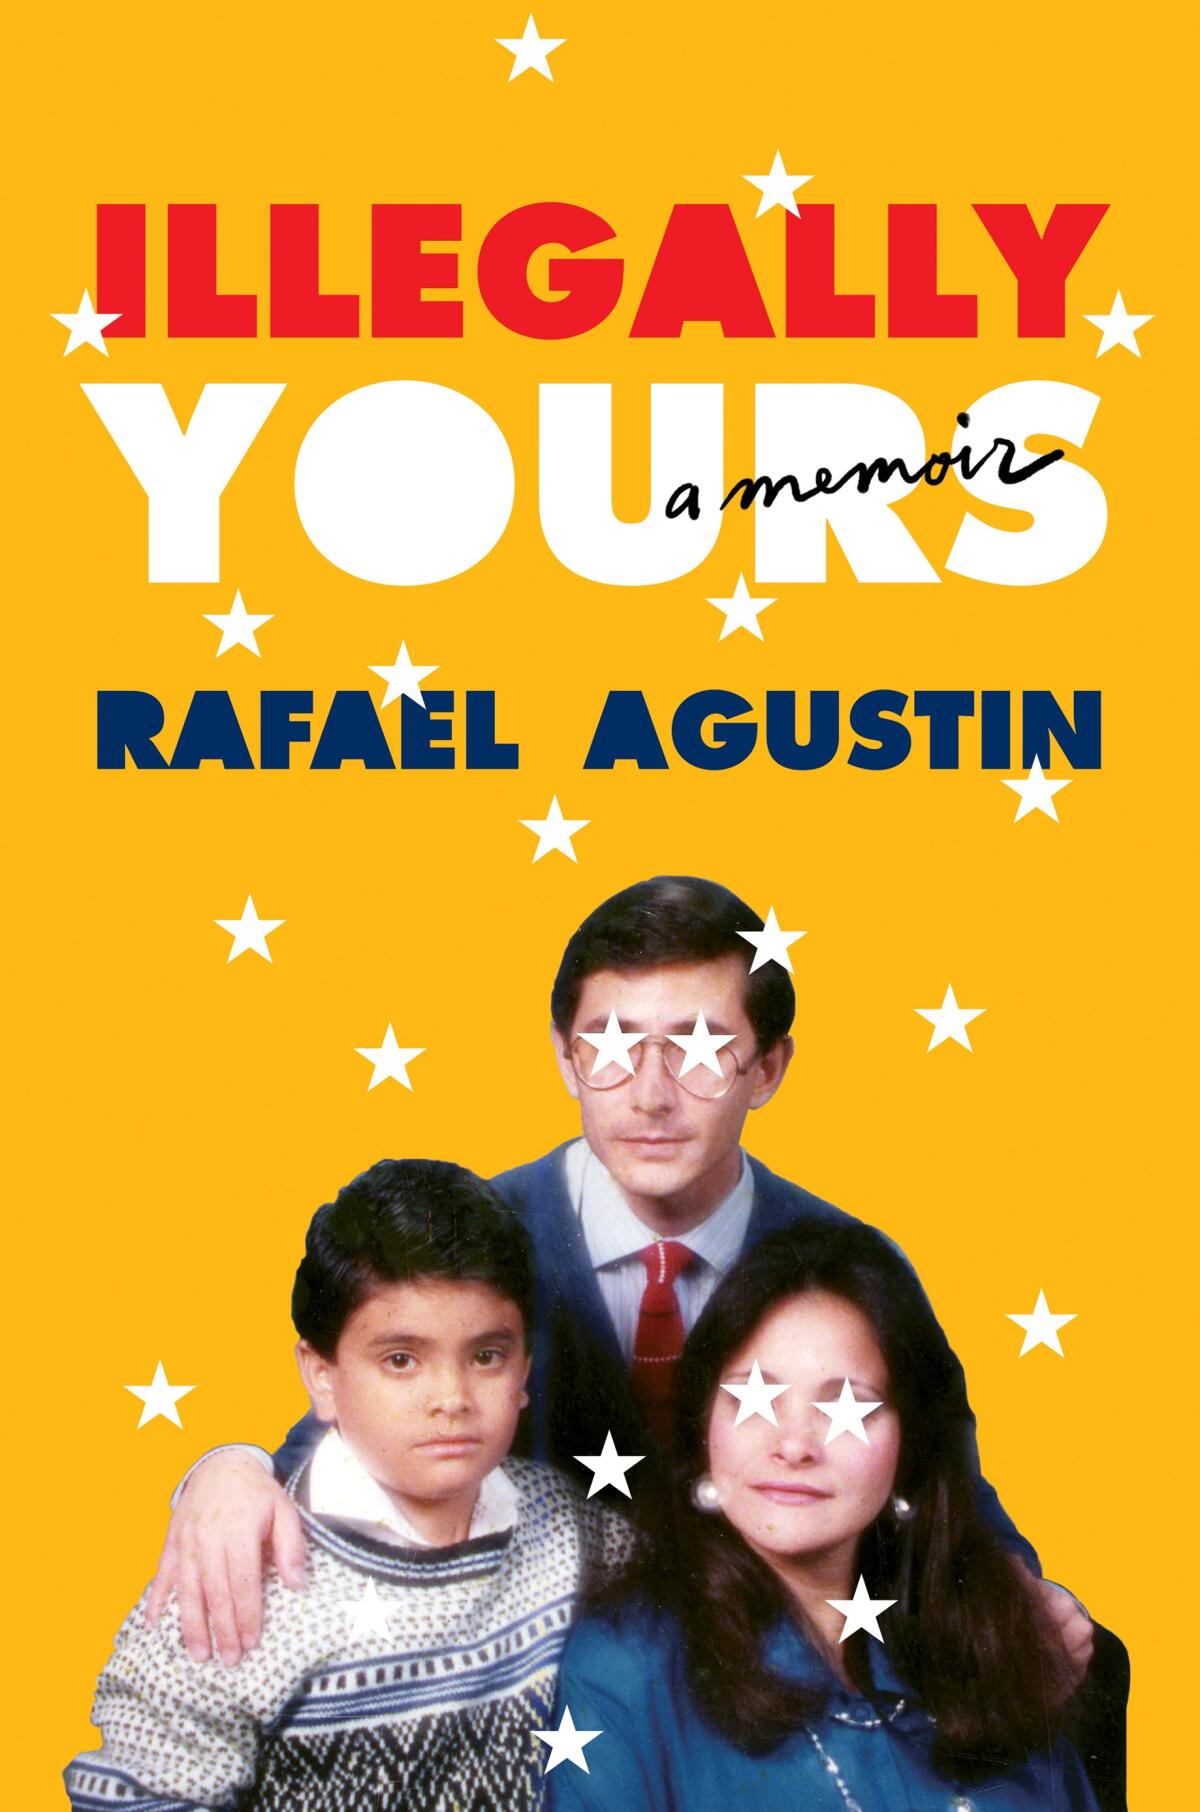 "Illegally Yours: A Memoir," by Rafael Agustin